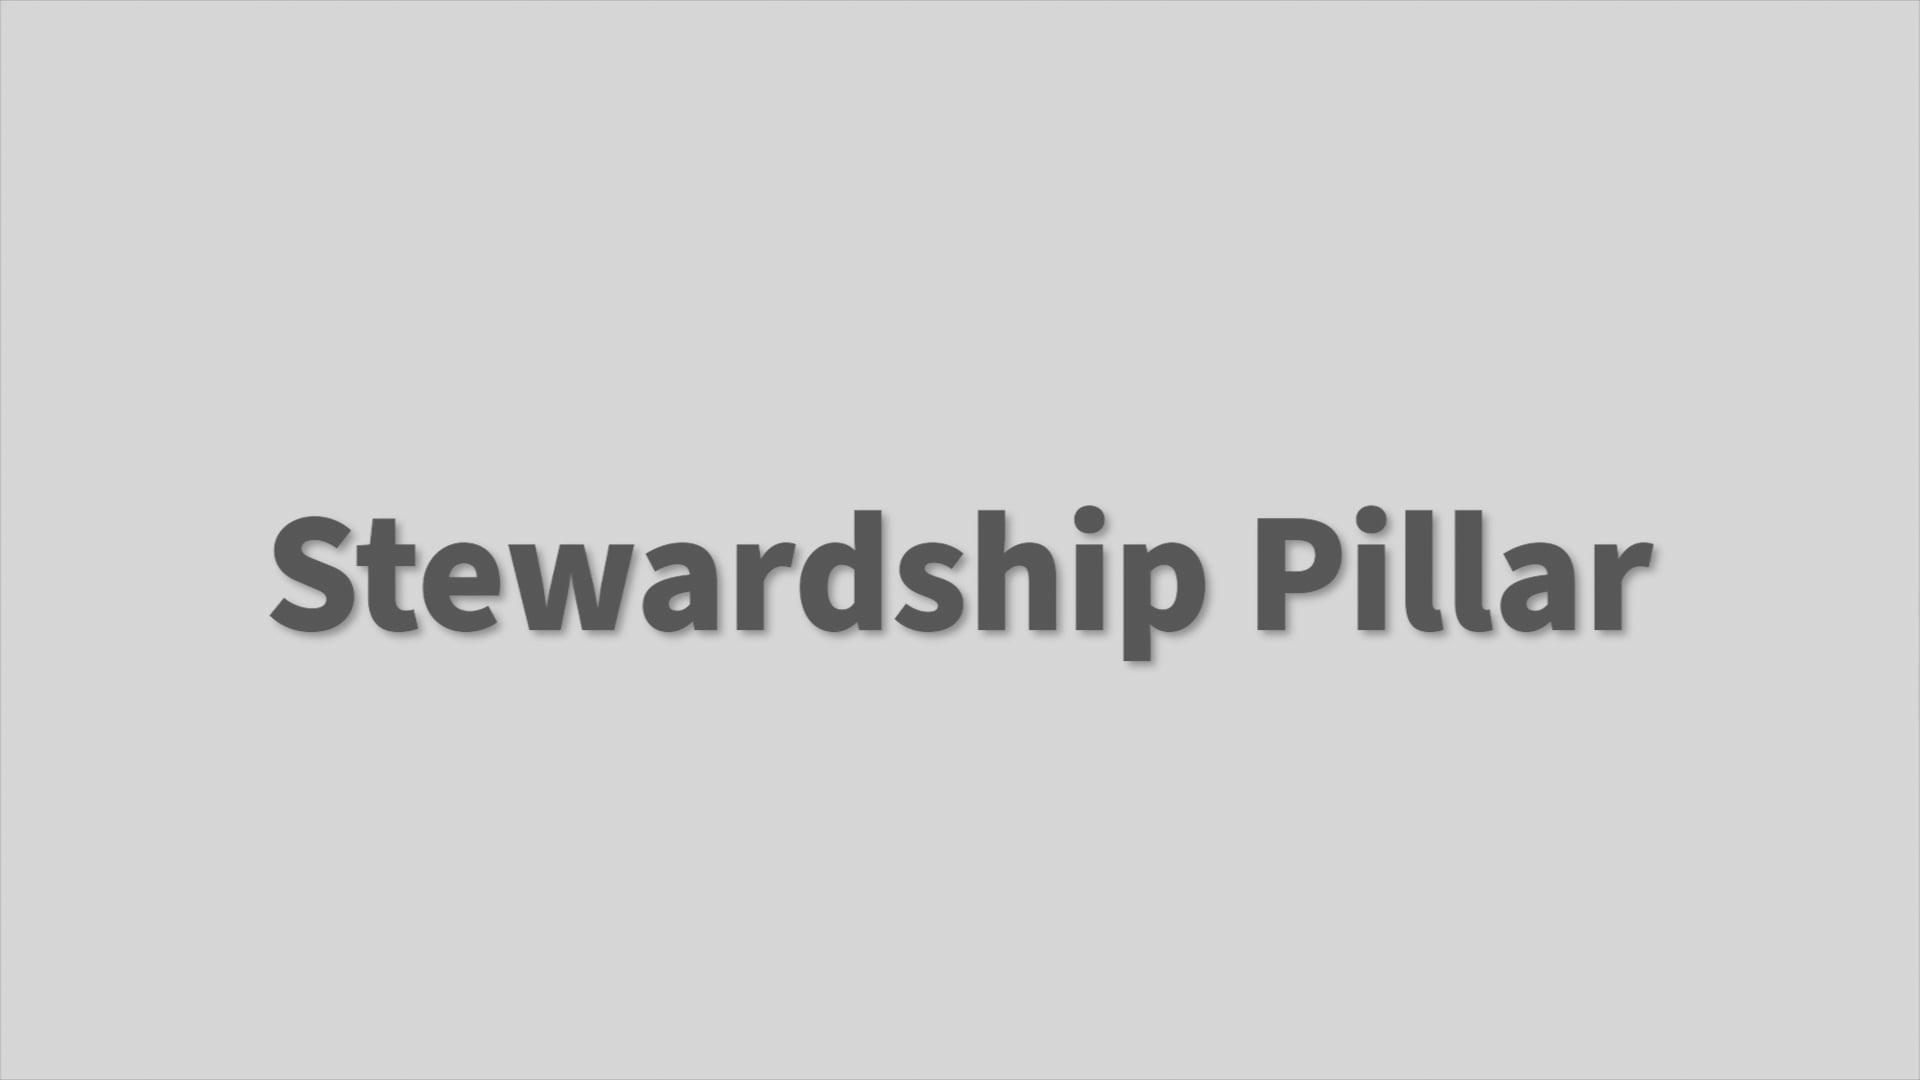 Stewardship Pillar